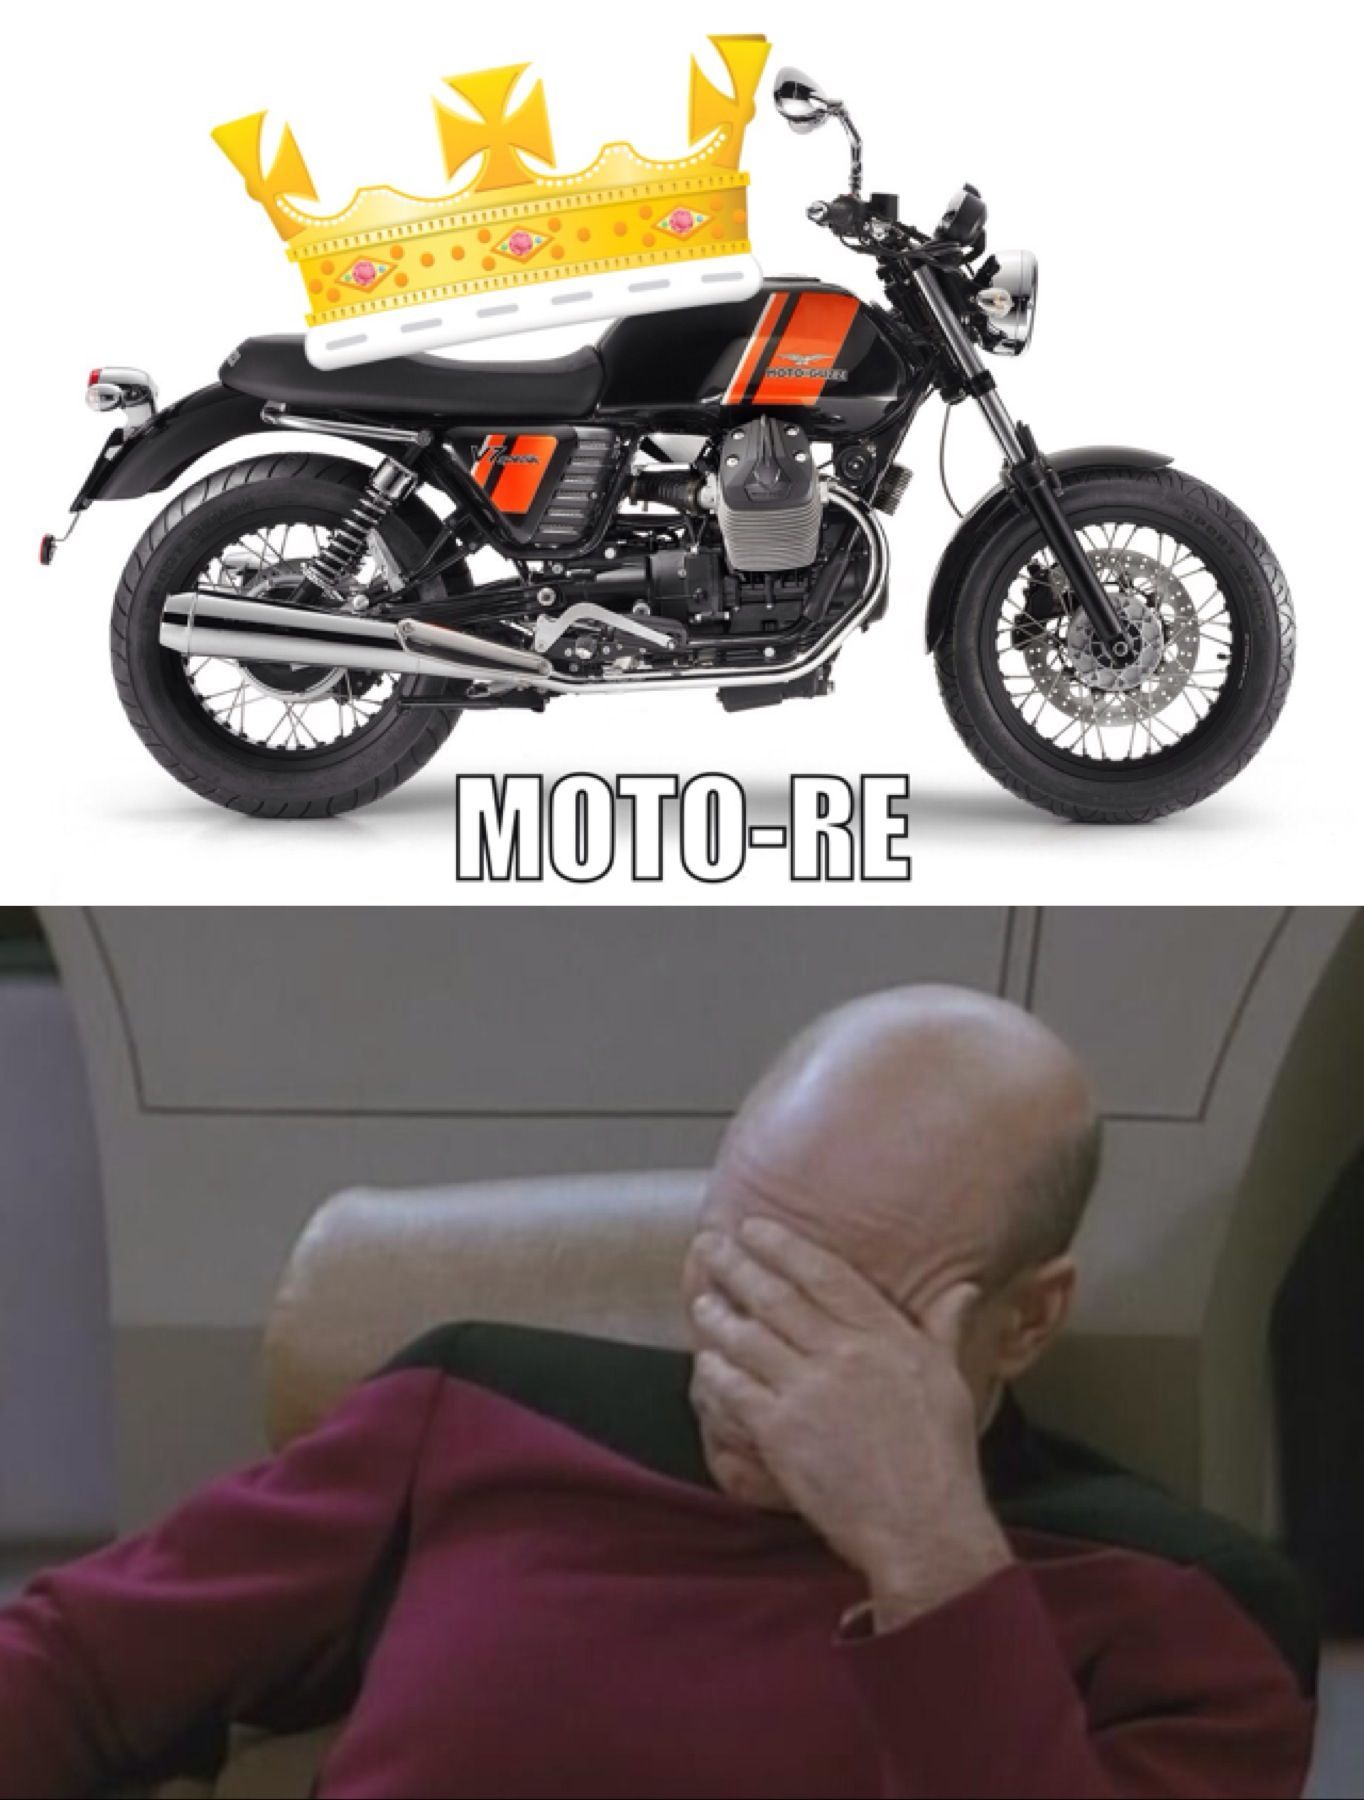 Motore - meme